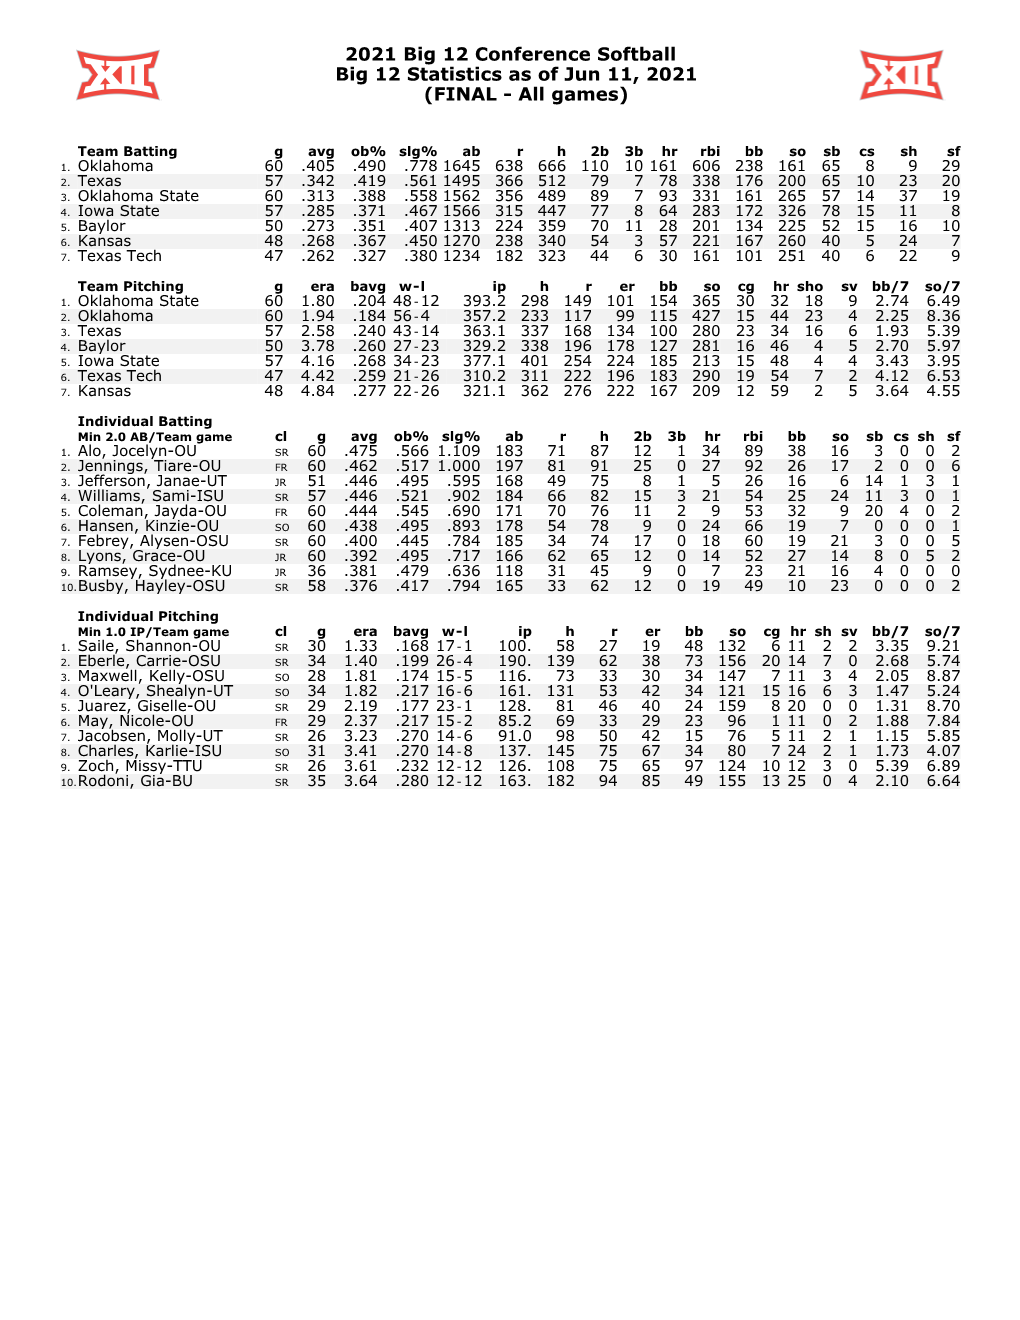 2021 Big 12 Conference Softball Big 12 Statistics As of Jun 11, 2021 (FINAL - All Games)